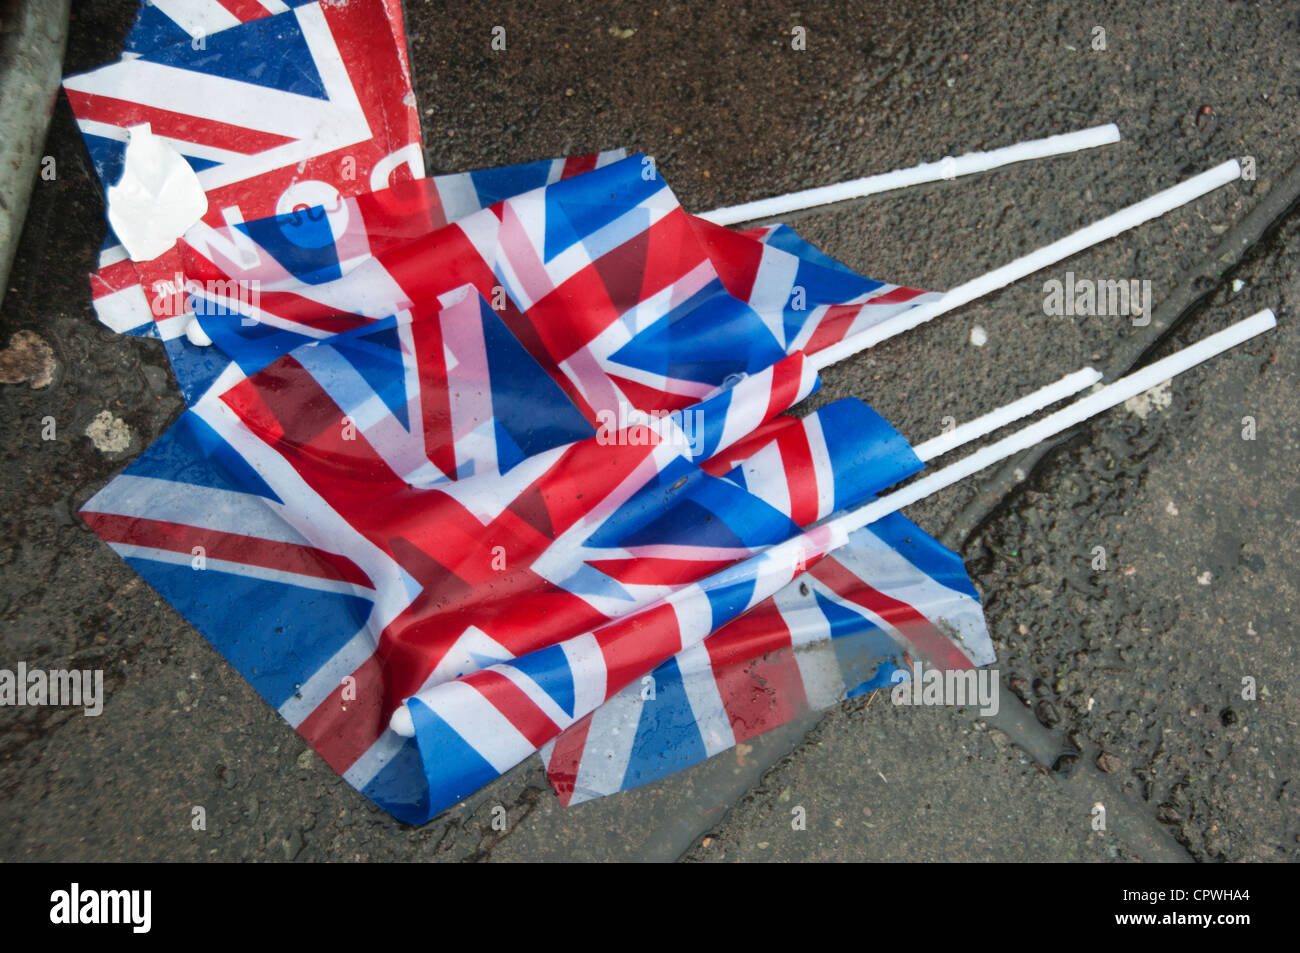 Queen Elizabeth Diamond Jubilee celebrations. Rain sodden Union Jack flags on the pavement. Stock Photo